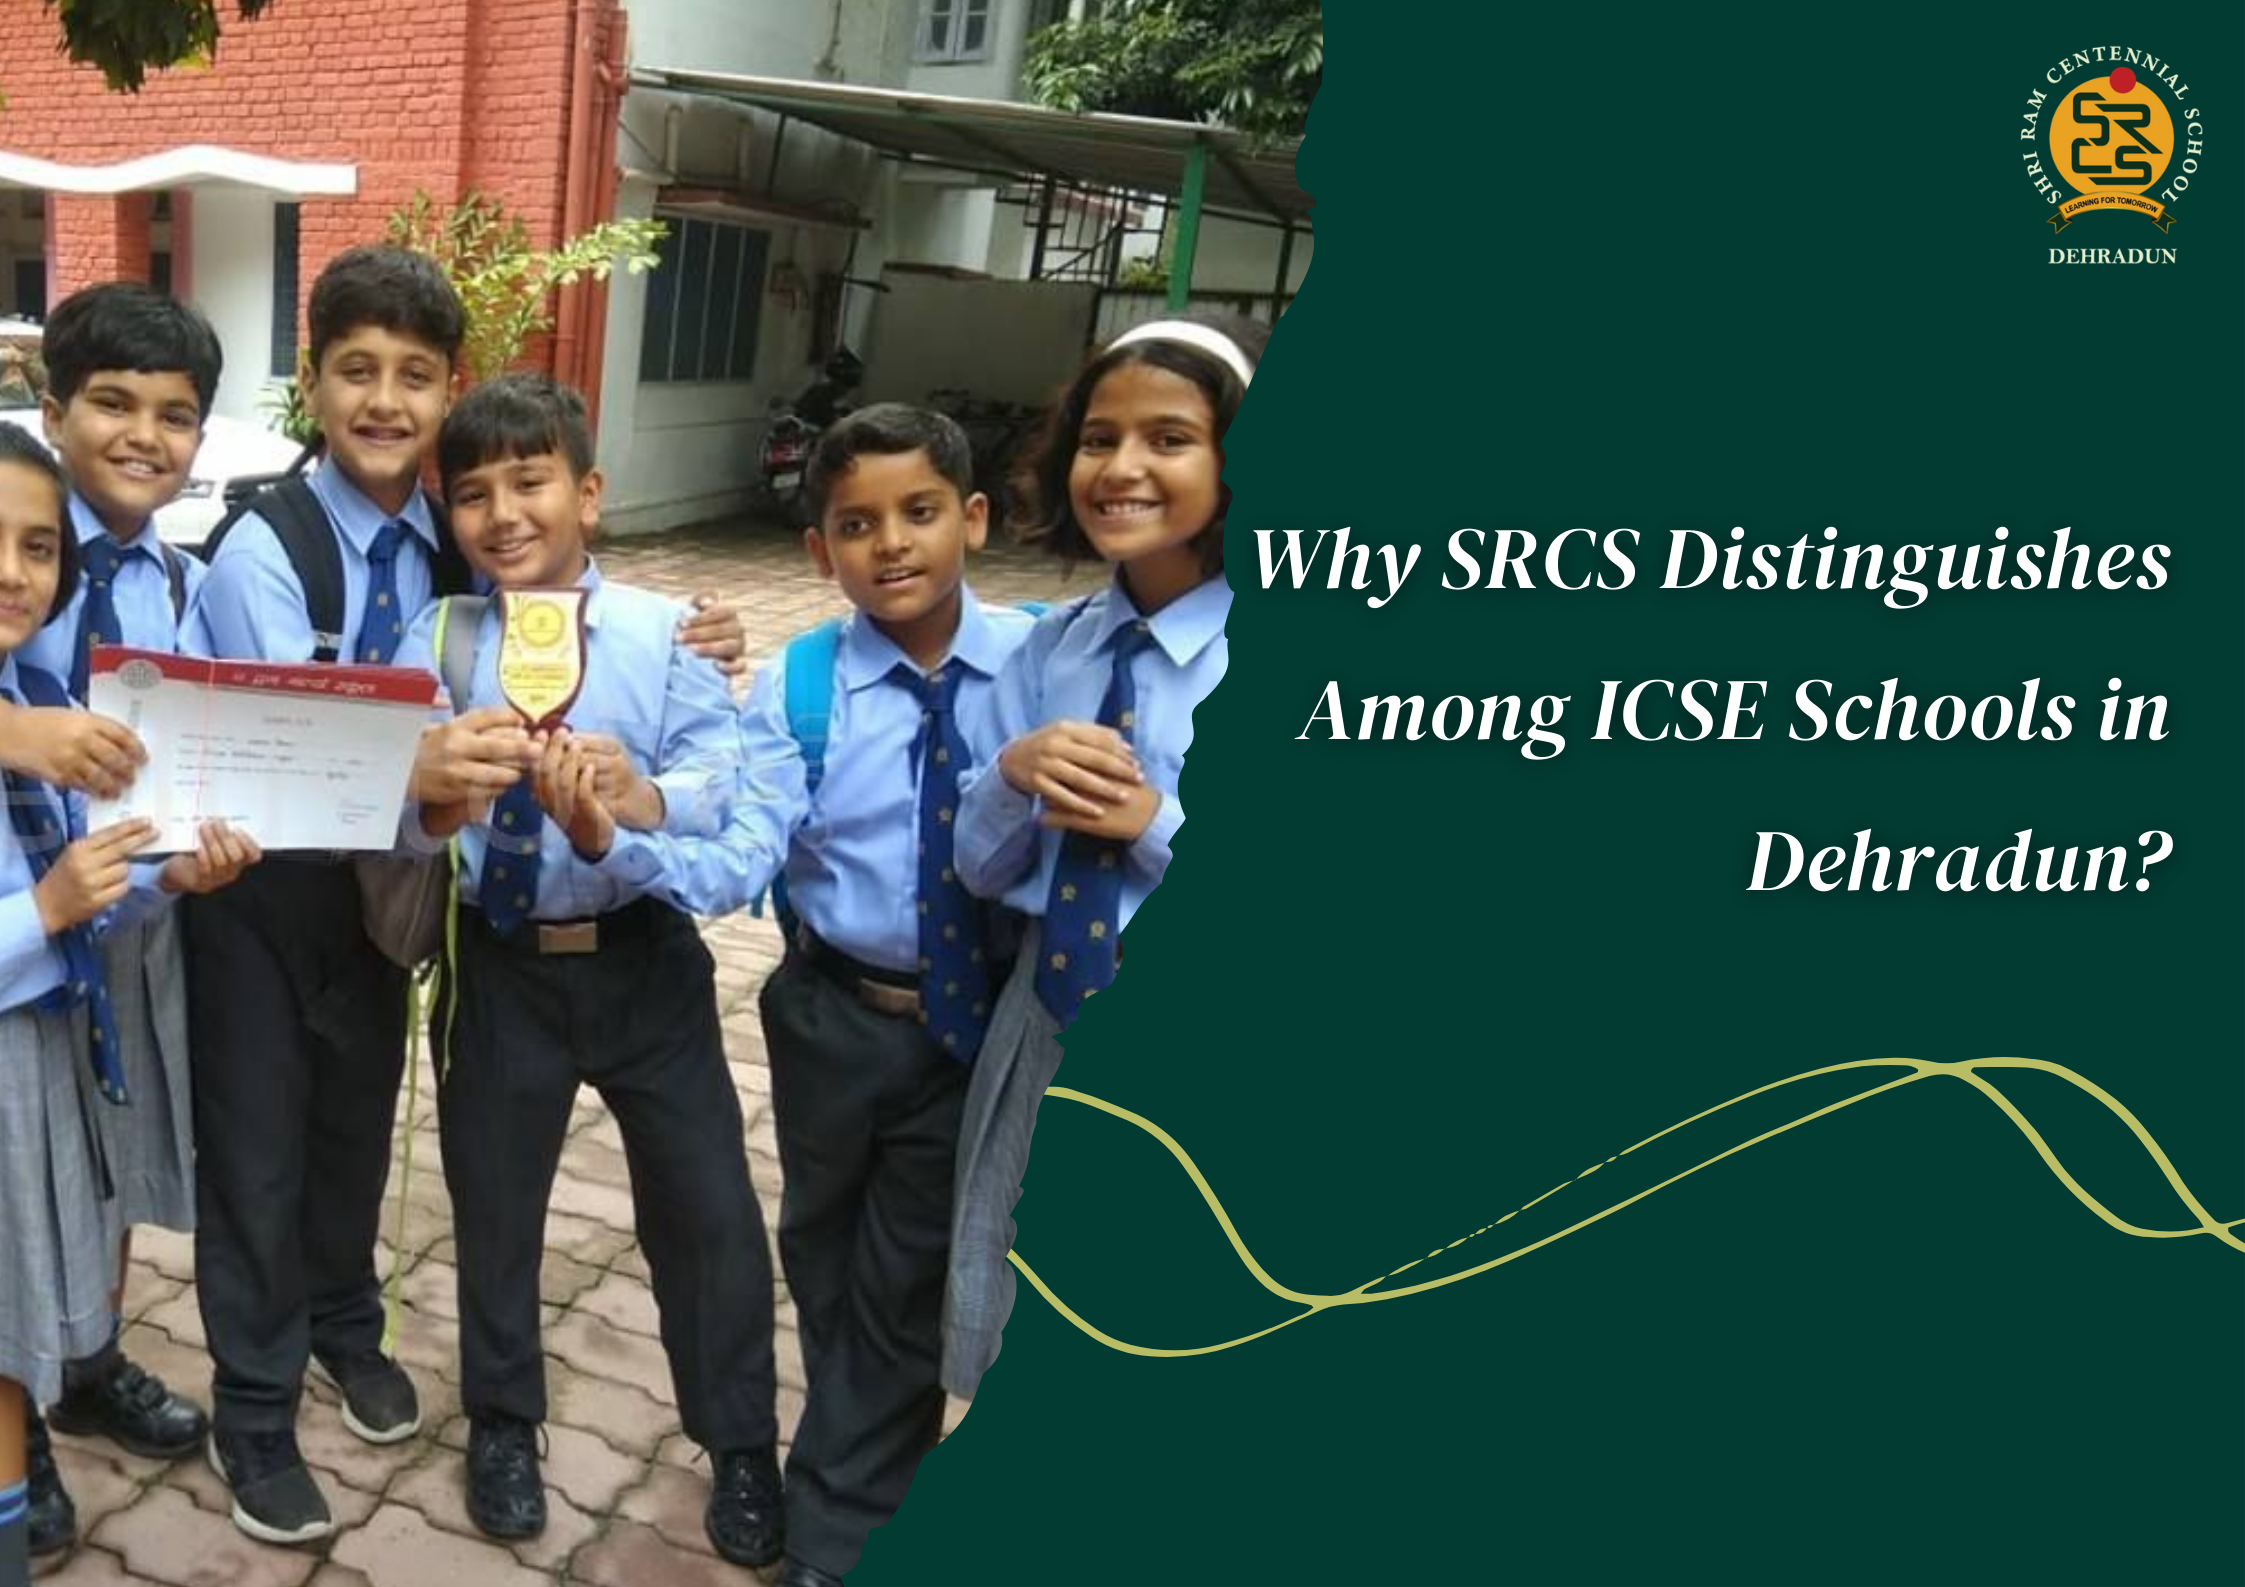 Why SRCS Distinguishes Among ICSE Schools in Dehradun?